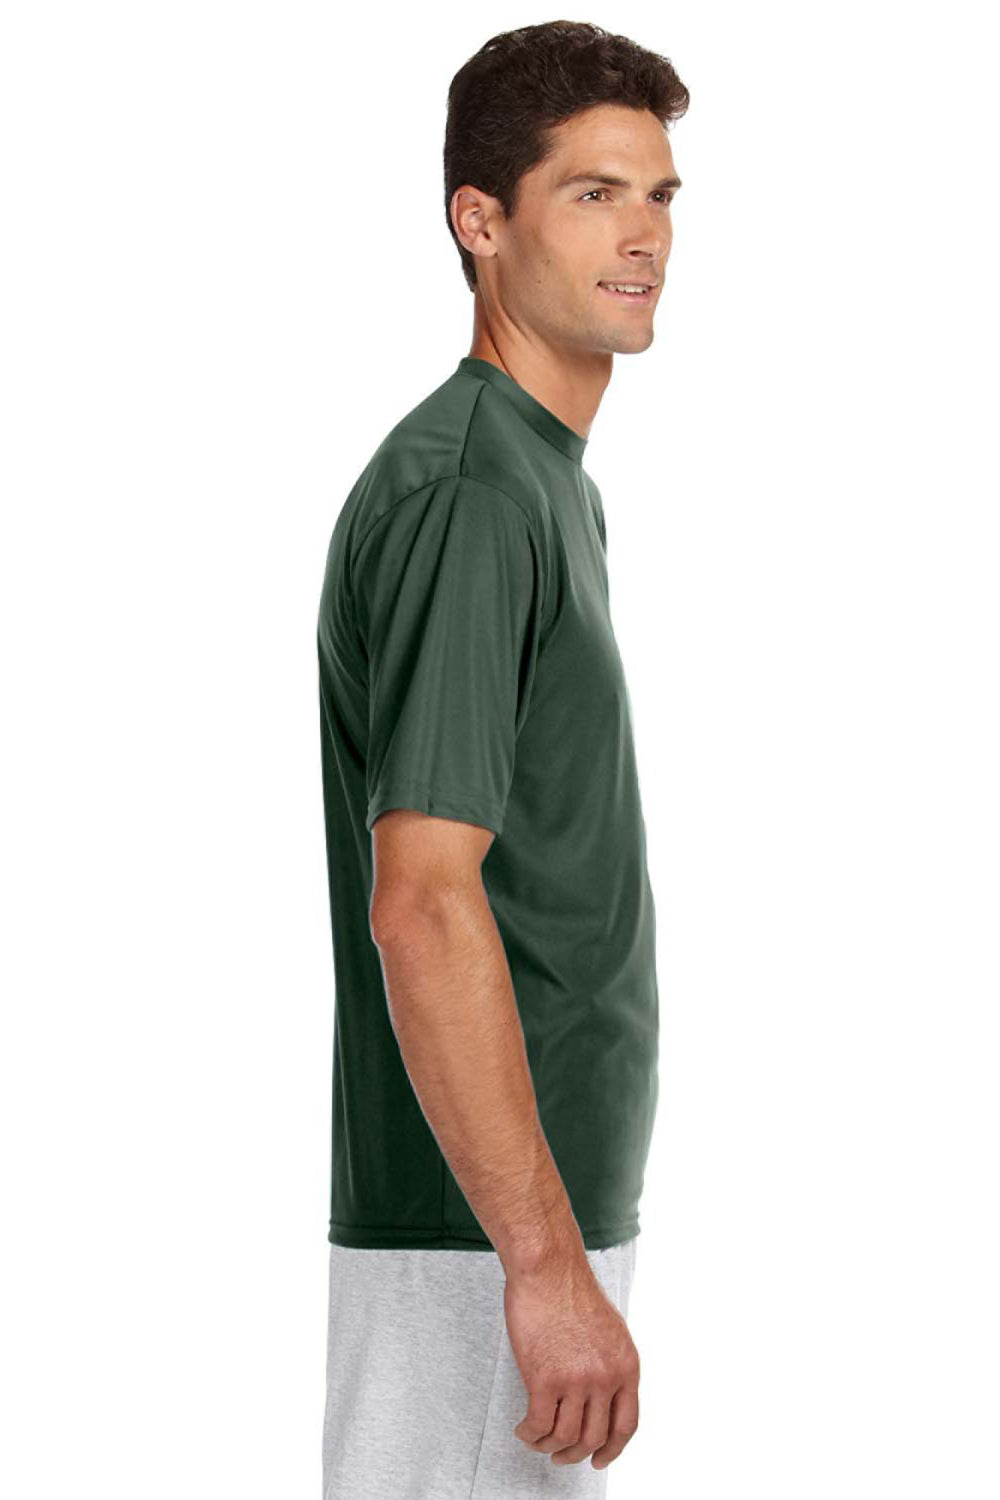 A4 N3142 Mens Performance Moisture Wicking Short Sleeve Crewneck T-Shirt Forest Green Model Side